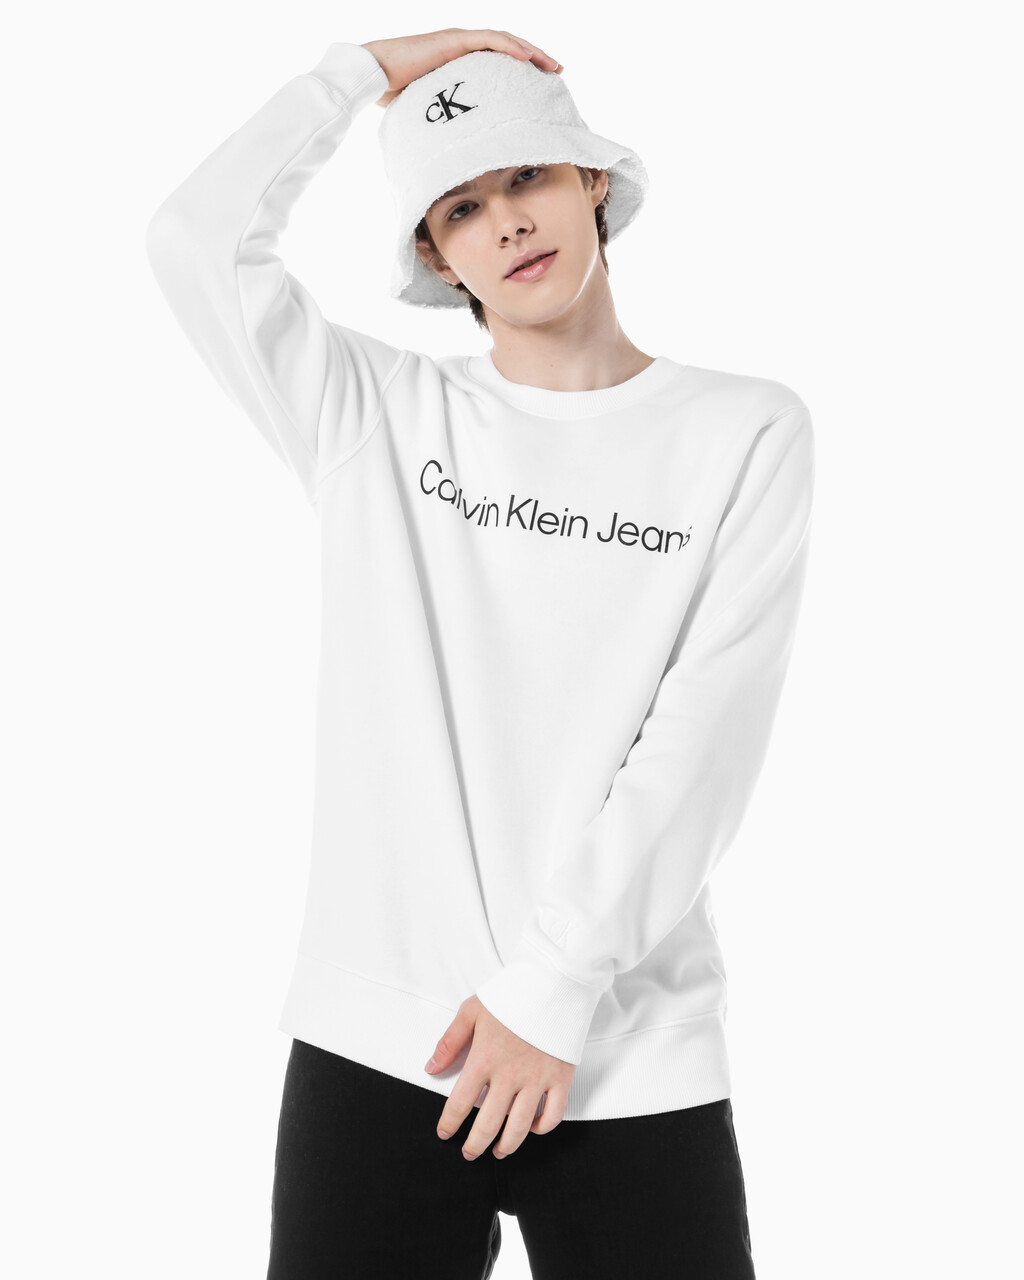 Buy 남성 레귤러핏 인스티튜셔널 로고 기모 스웨트셔츠 in color BRIGHT WHITE